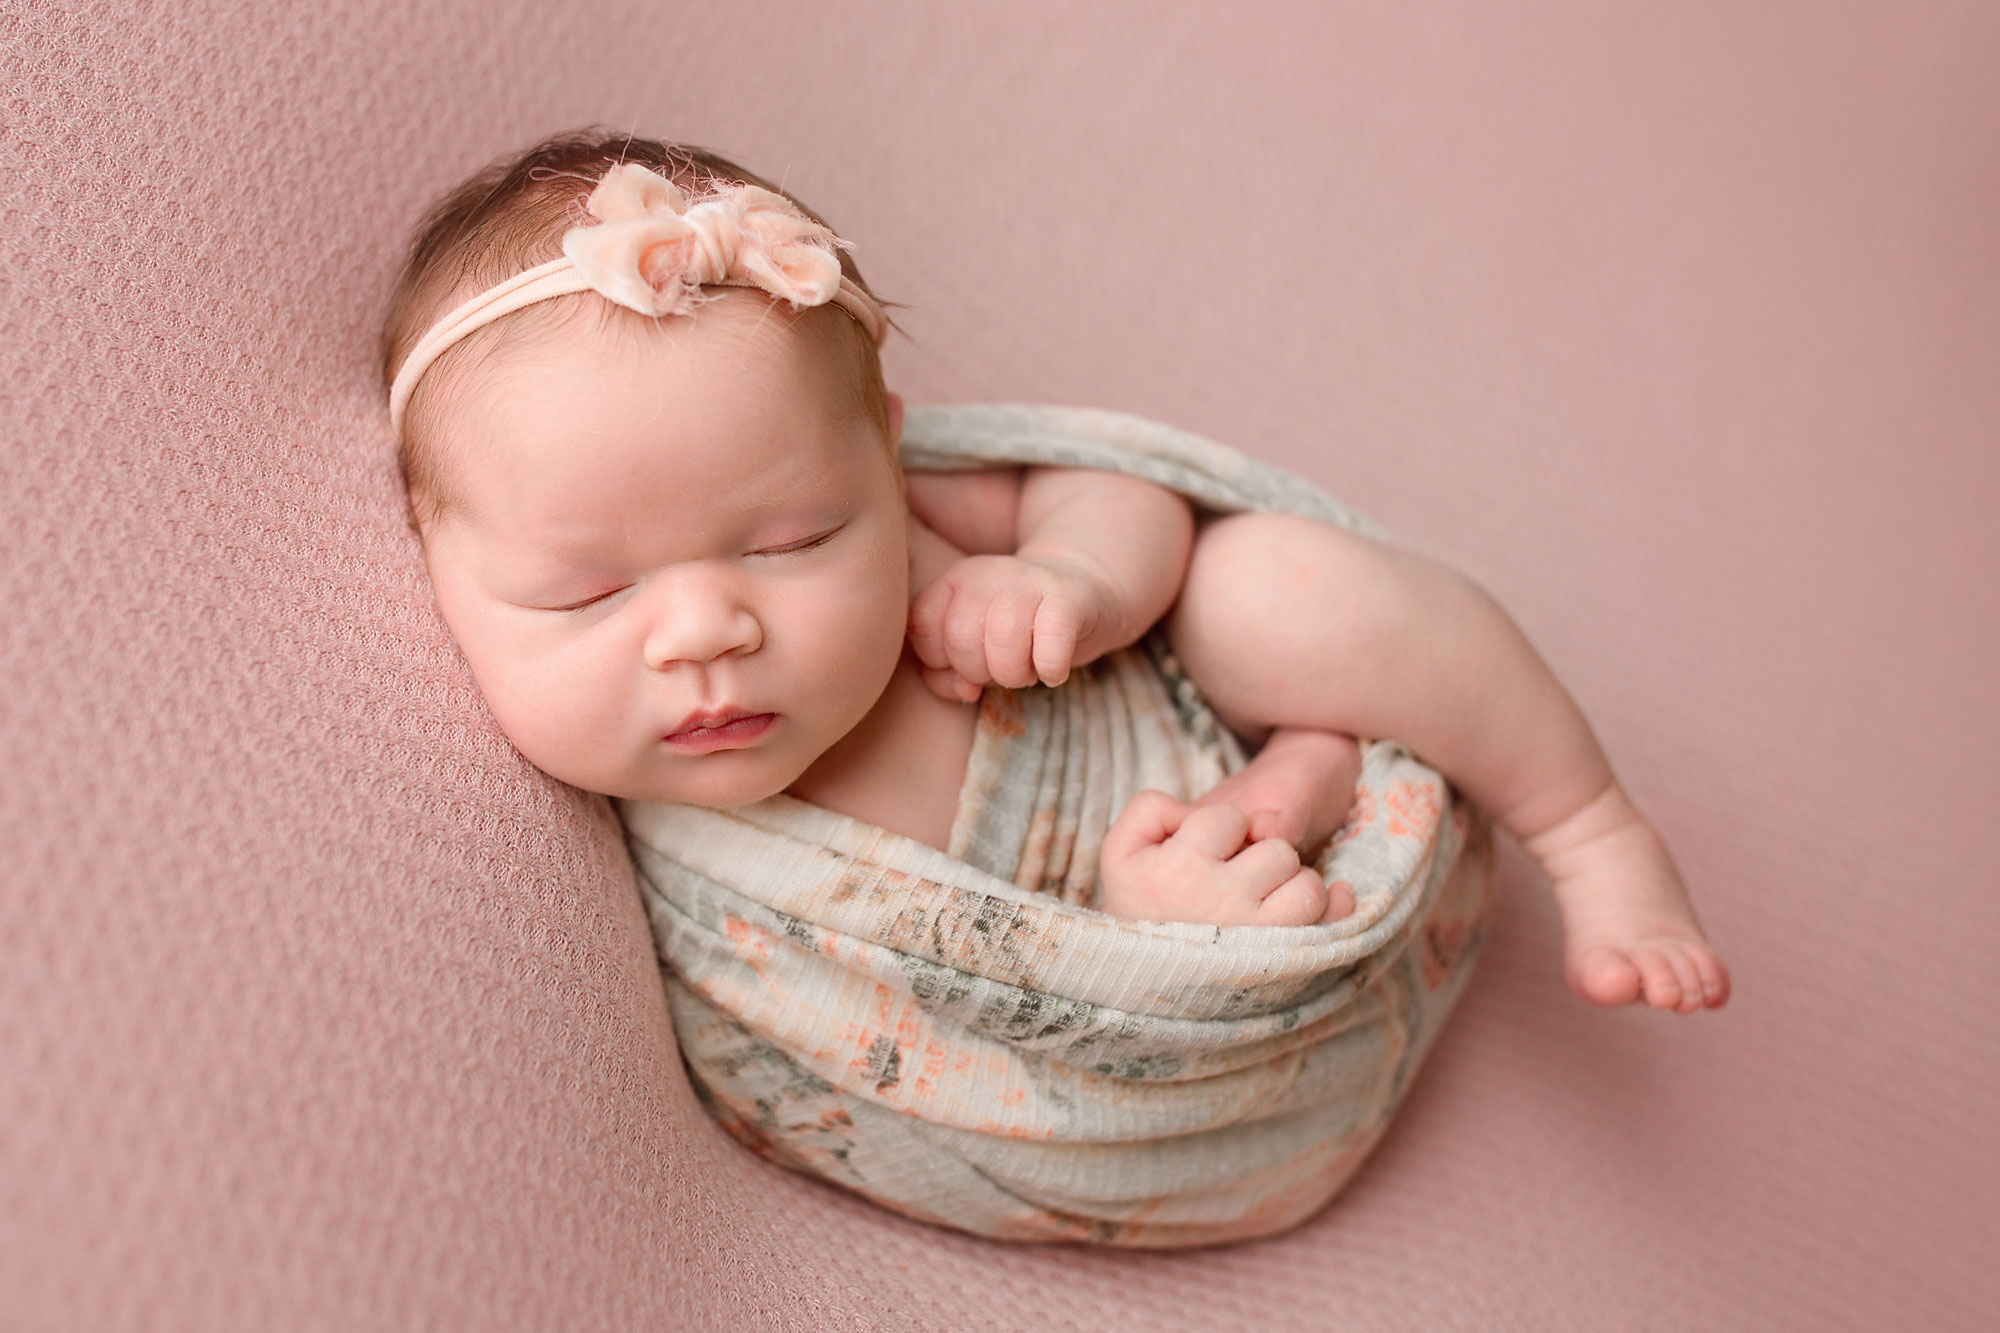 newborn baby girl sleeping on a blanket during her essex county nj newborn photo session 